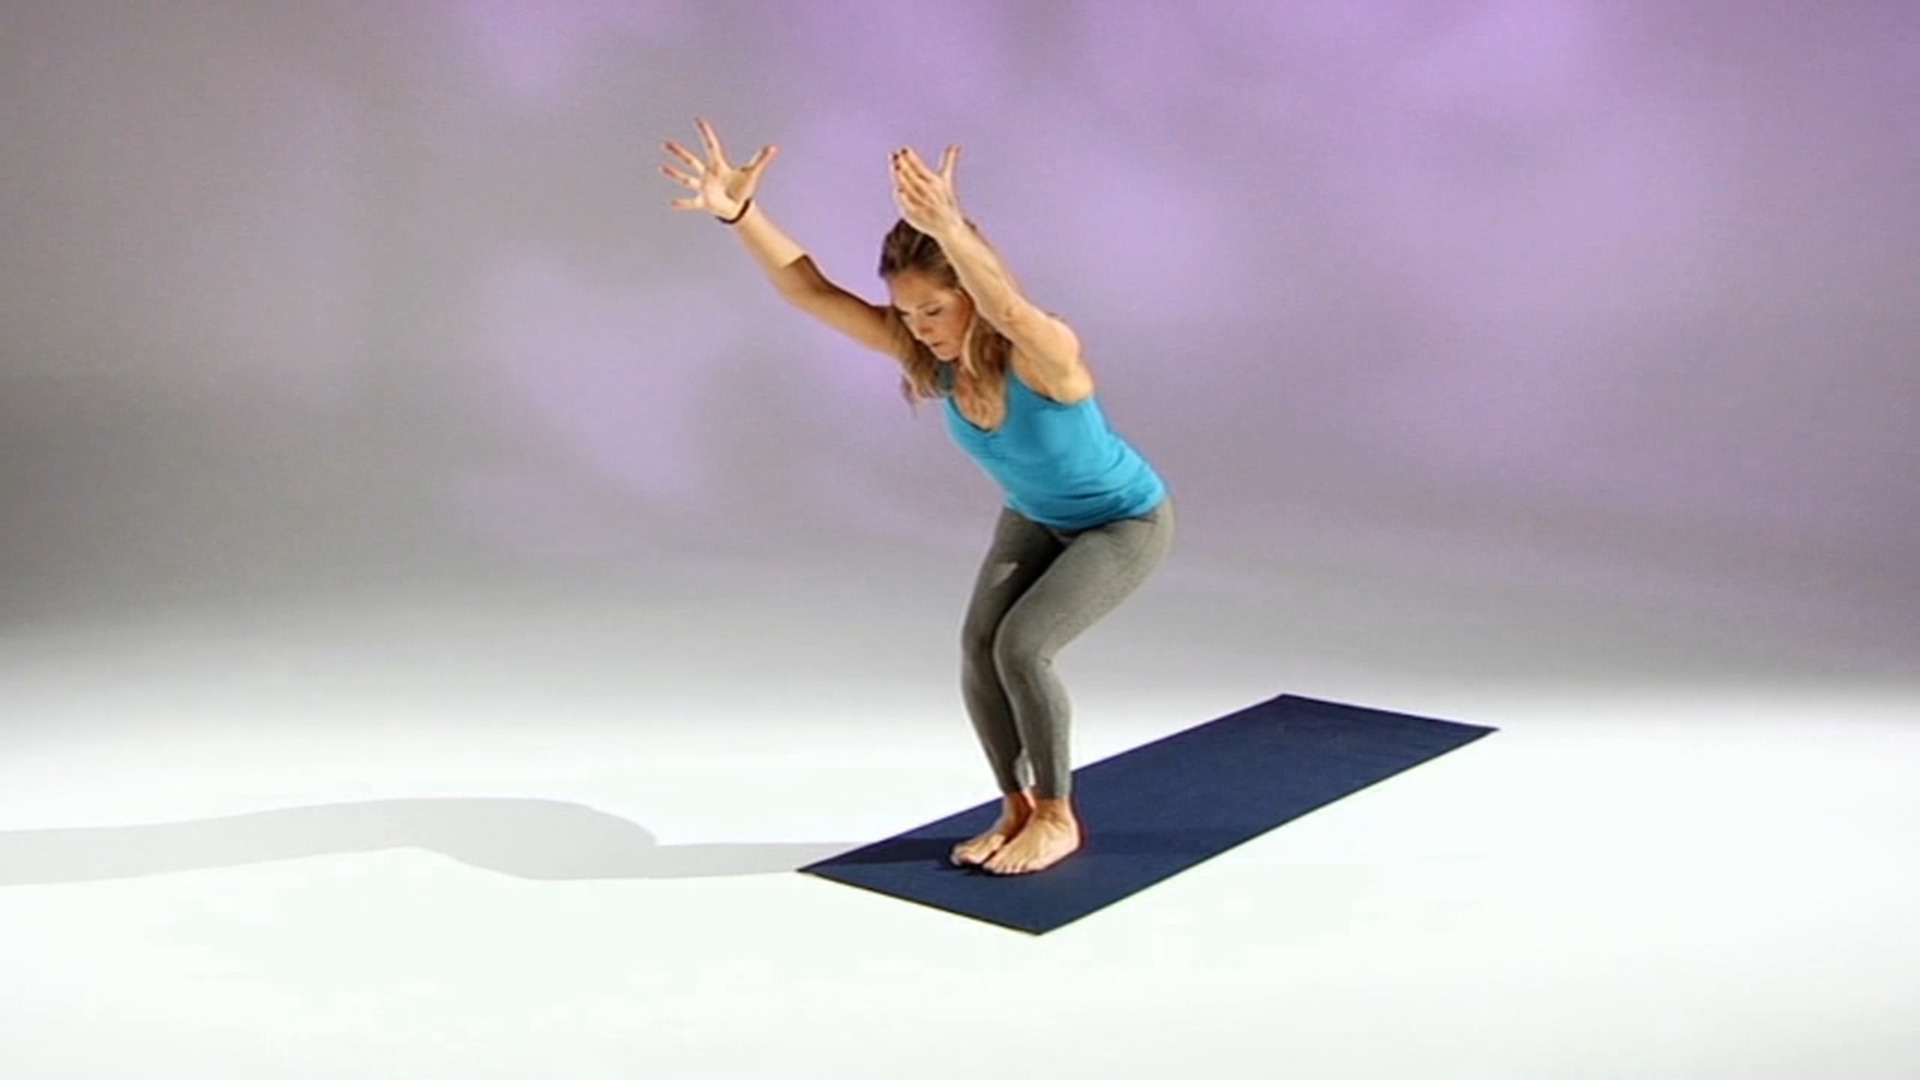 Yoga Pose Tutorial for Proper Alignment & Form